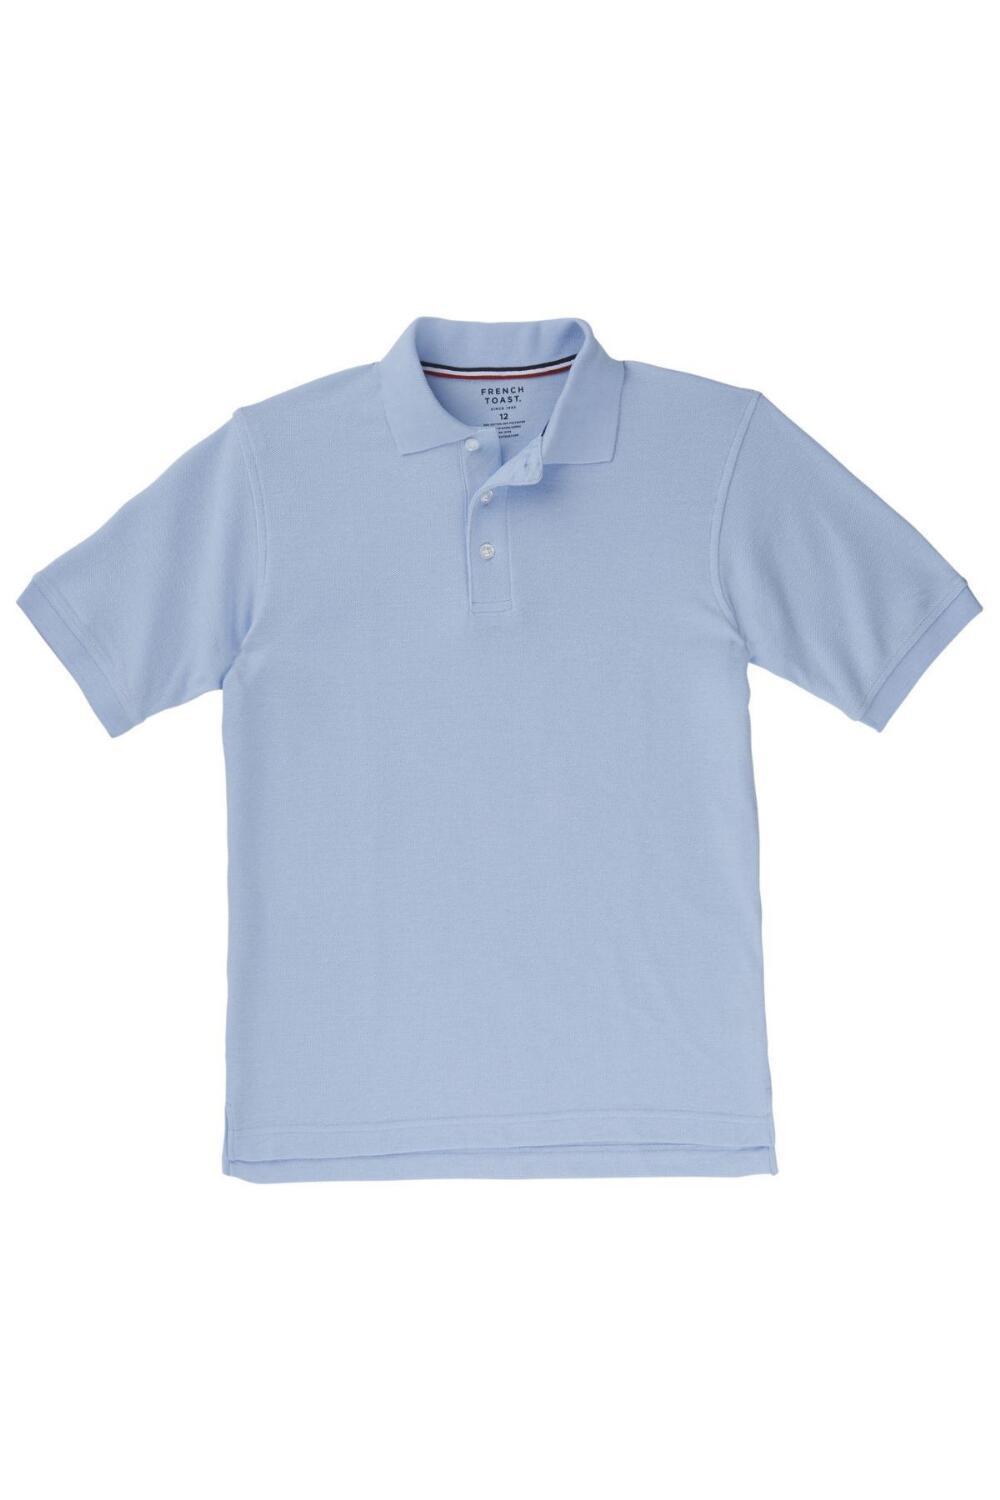 French Toast Boys Light Blue Short Sleeve Polo Shirt Lot Of 3 Size 14 